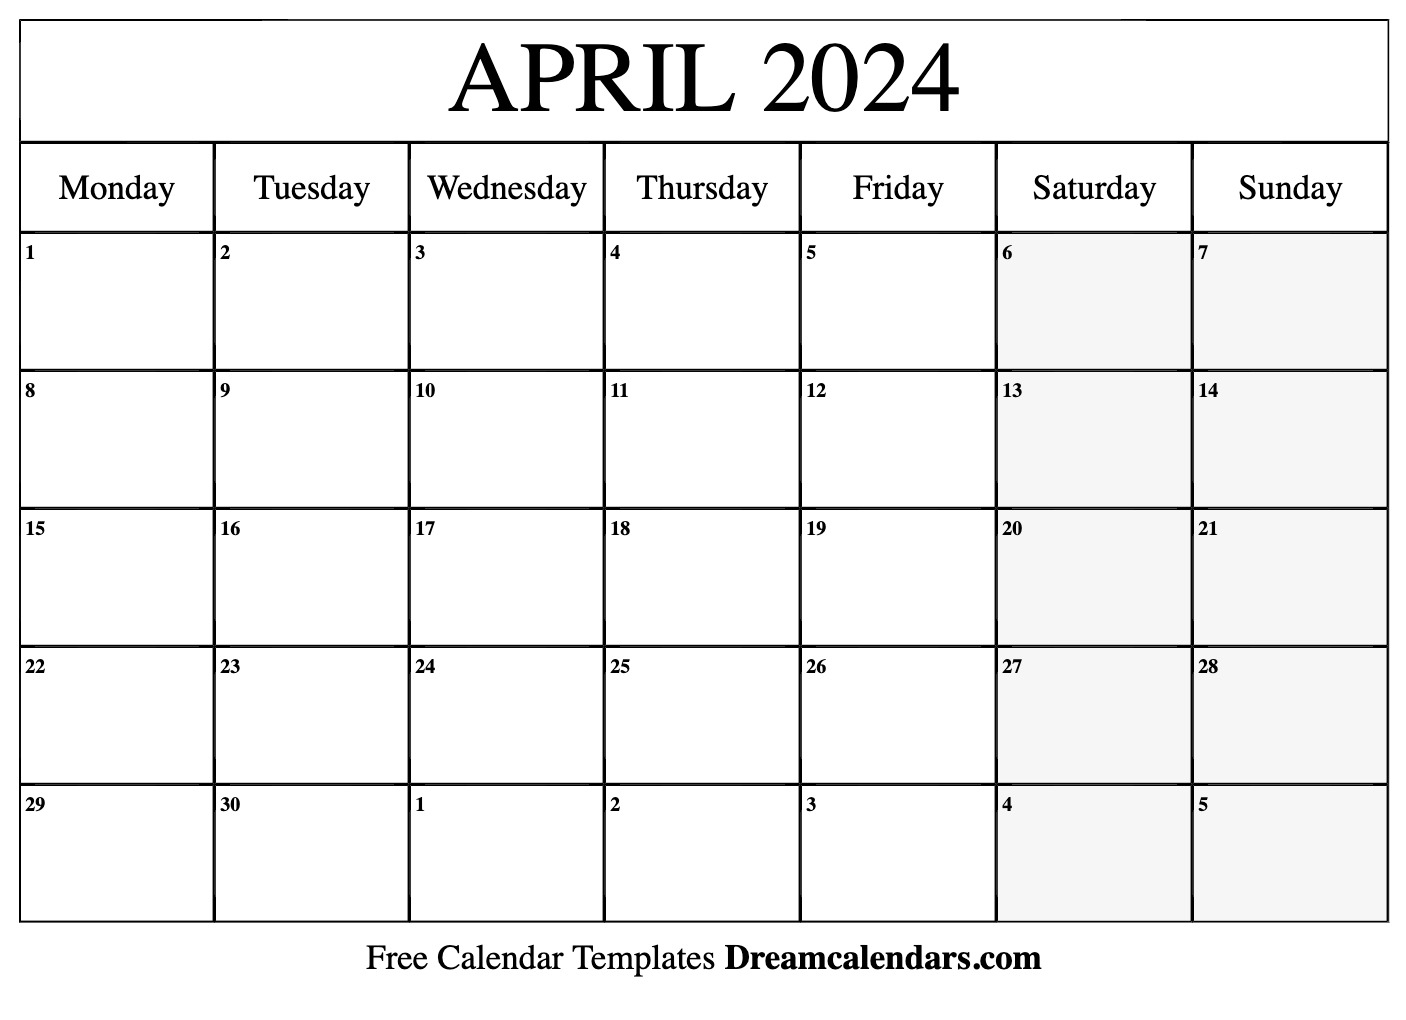 April 2024 Calendar | Free Blank Printable With Holidays within April 20 2024 Calendar